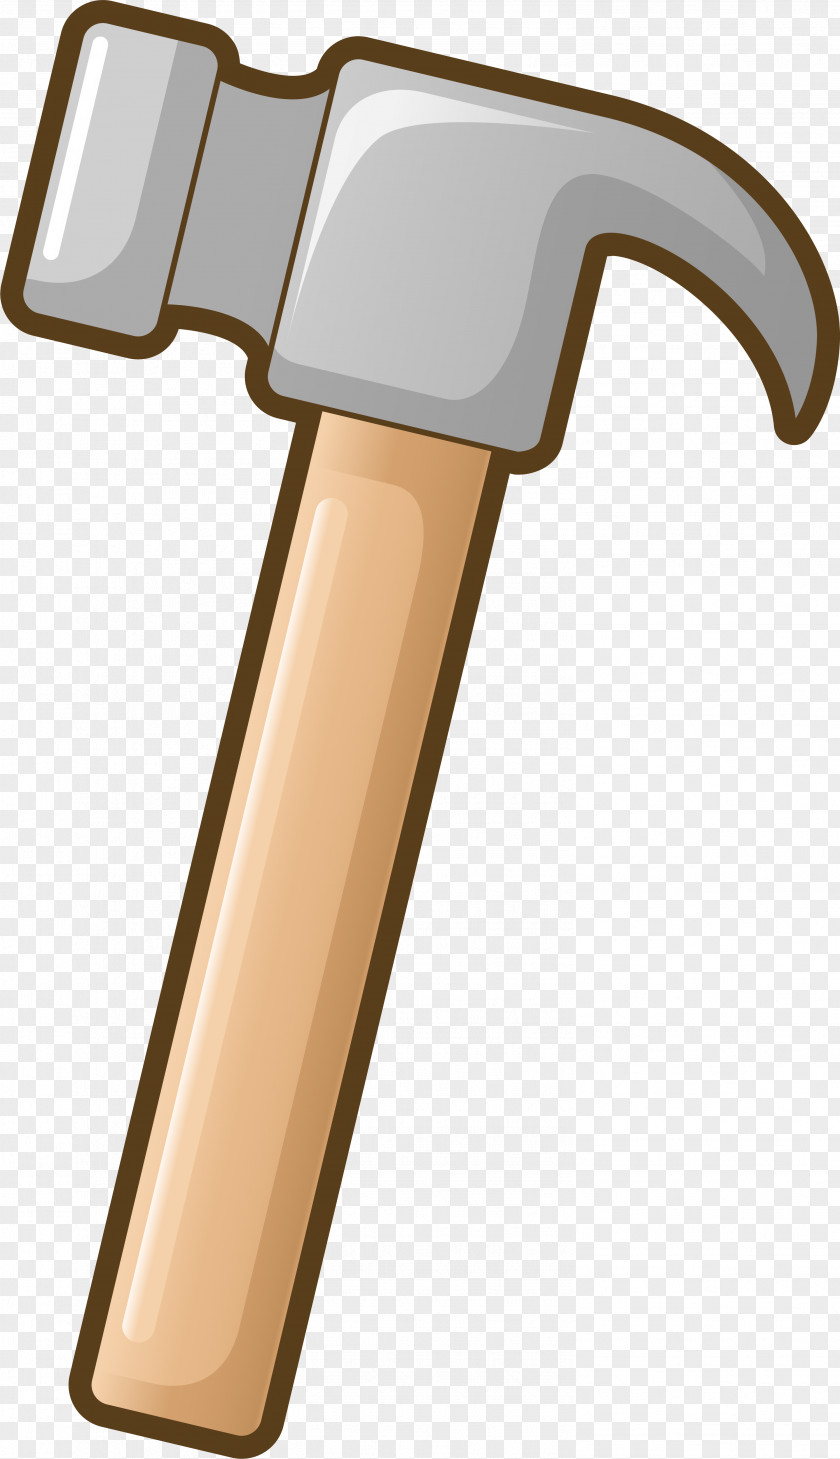 Simple Gray Hammer Tool Cartoon PNG